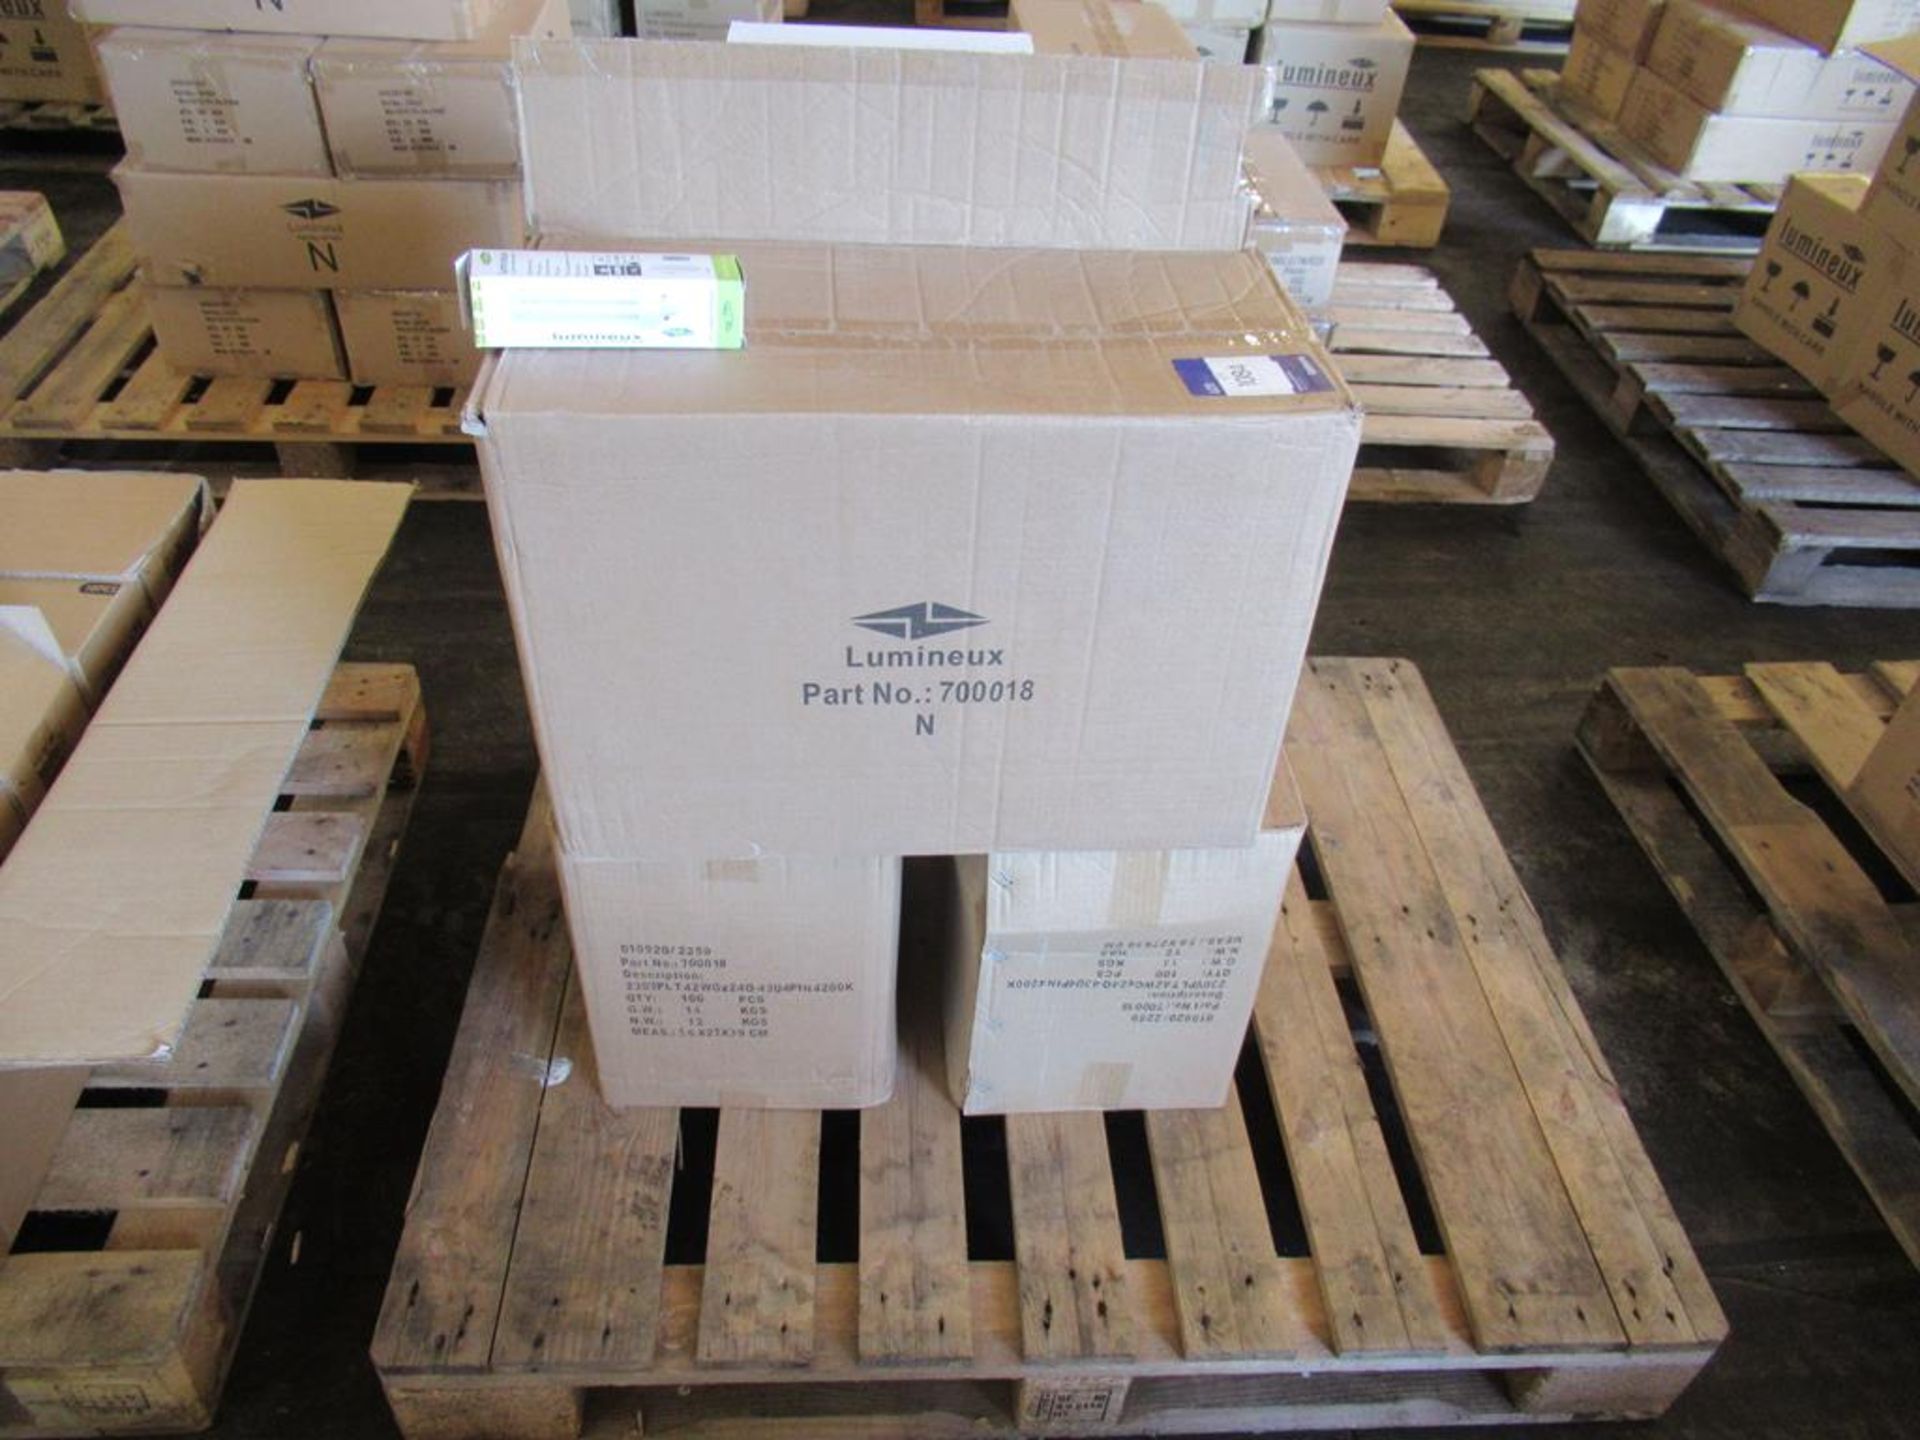 4x boxes of Lumineux GX24Q- 4 4pin 42W 4200K Cool White PLT Compact Fluorescent Bulbs (100pcs per bo